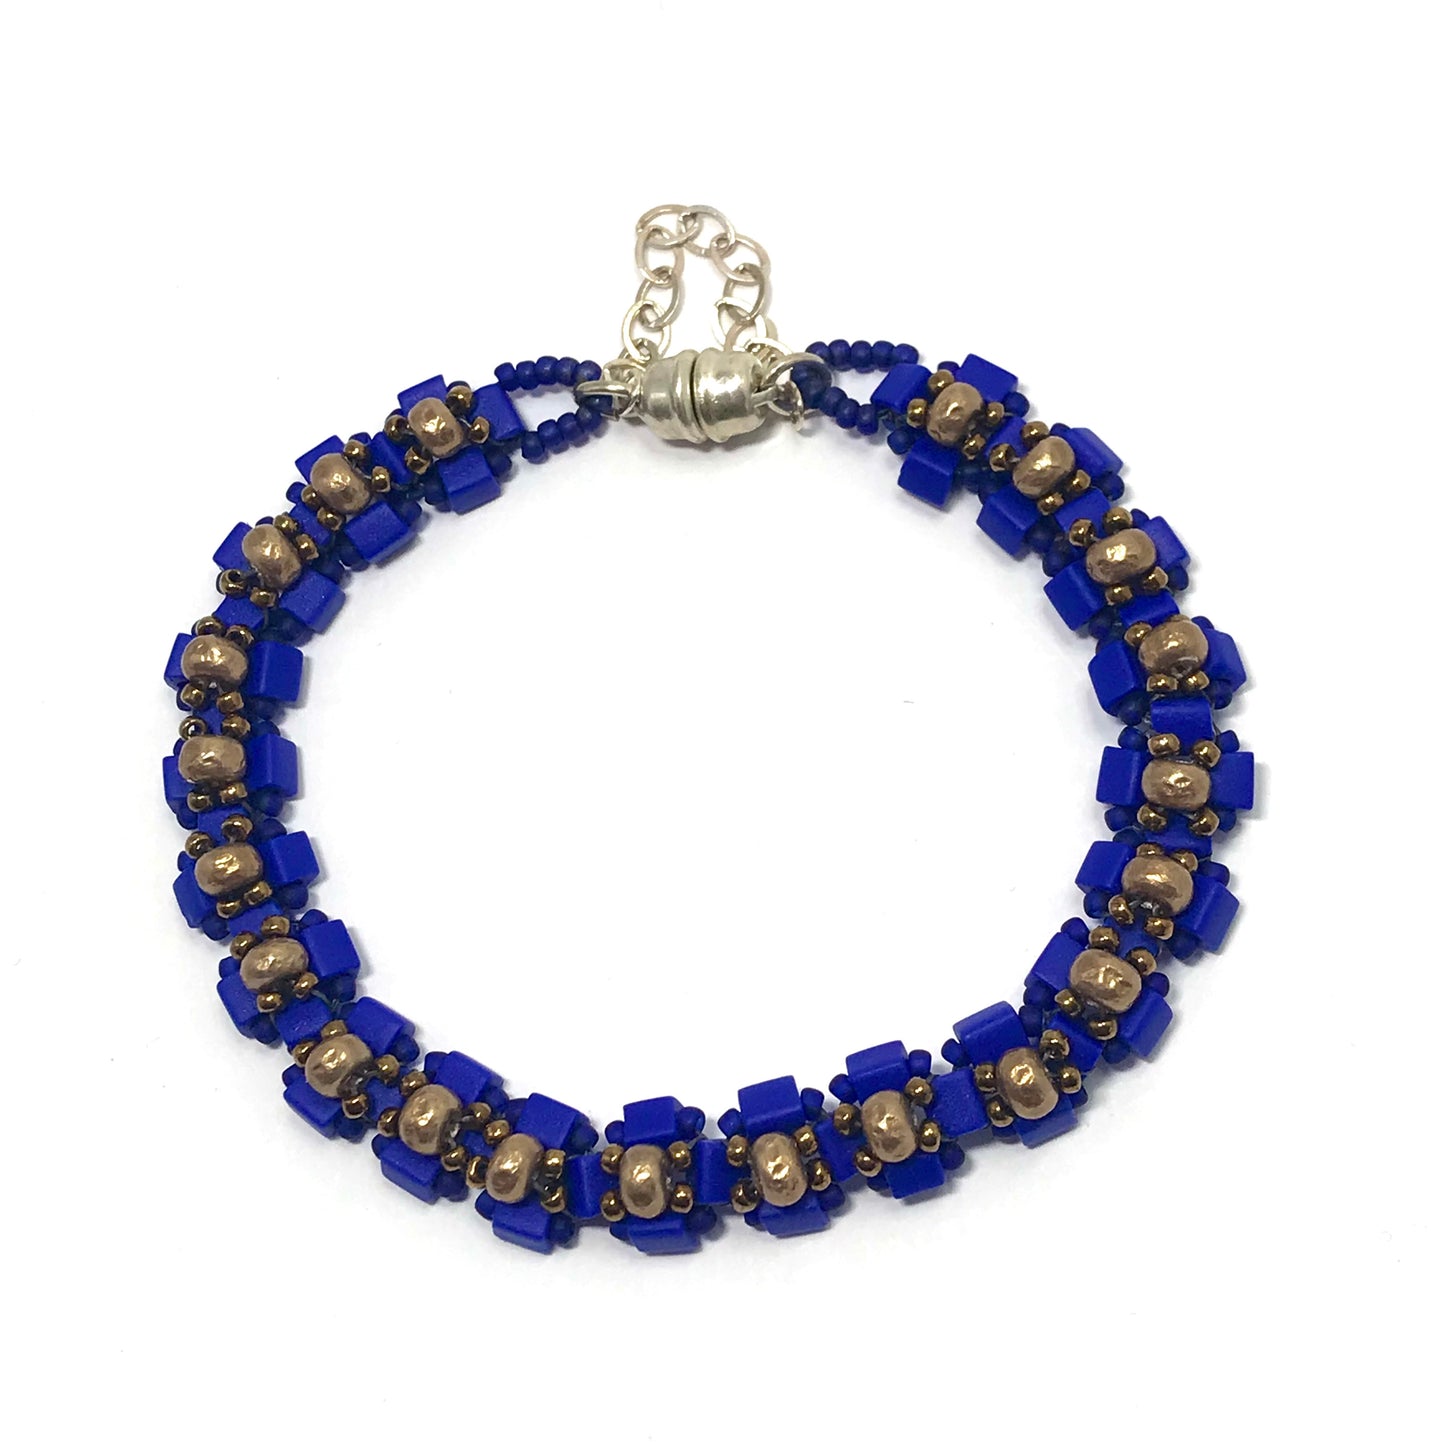 Midnight Blue with Matte Rainbow Glass Art Bead  Bracelet